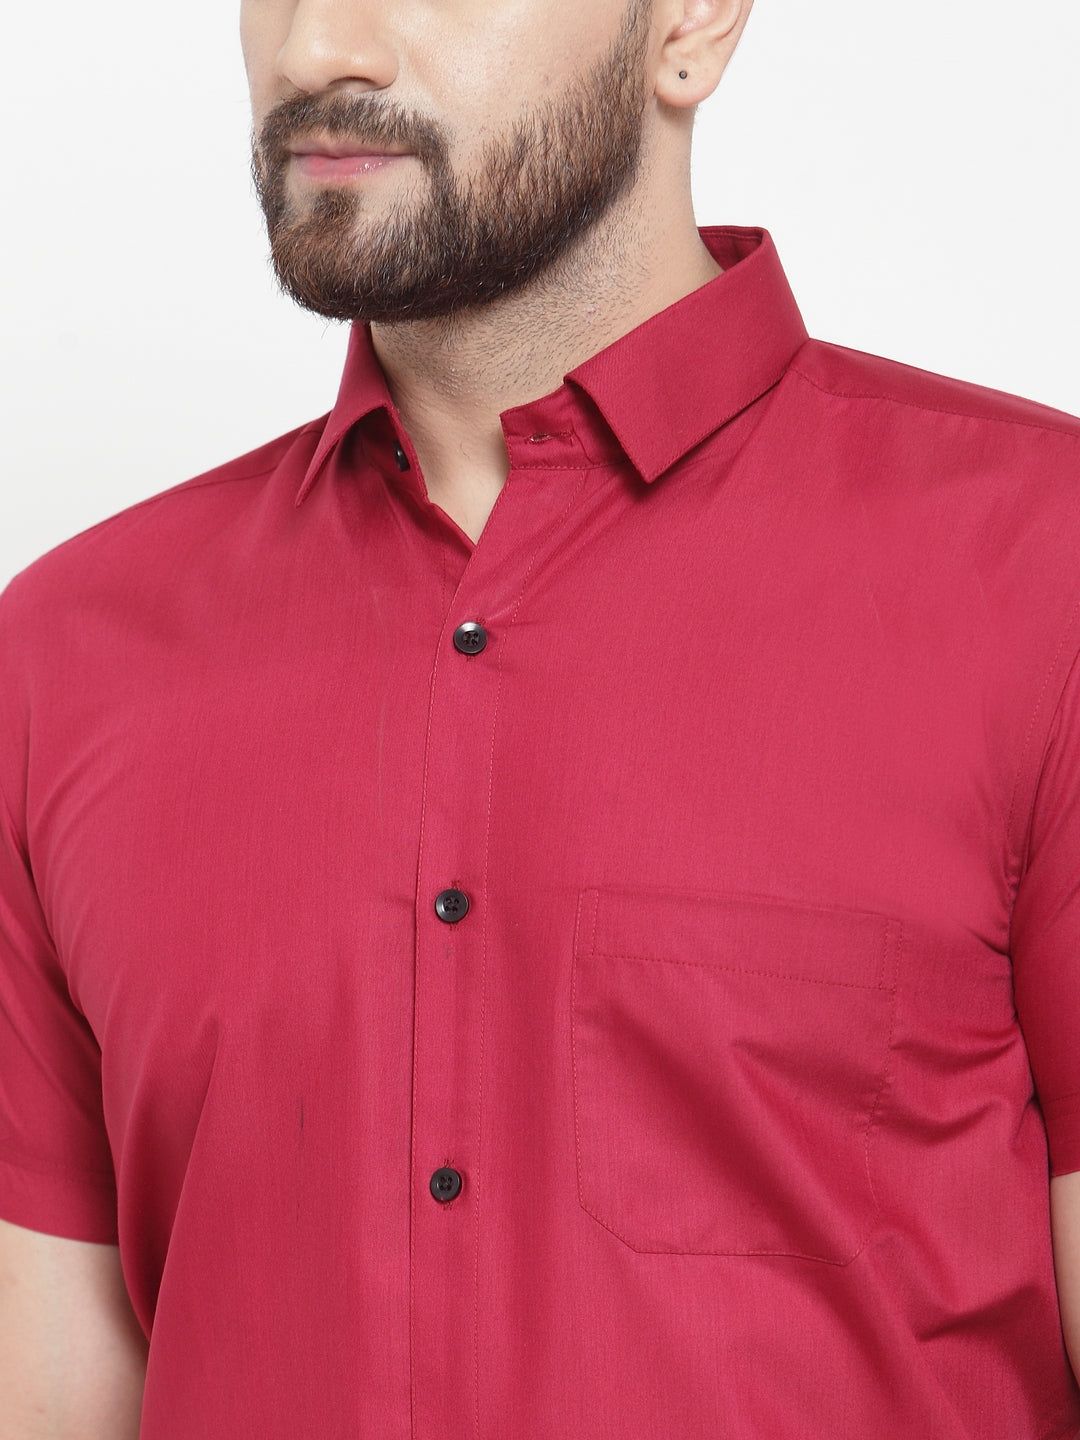 Men's Maroon Cotton Half Sleeves Solid Formal Shirts ( SF 754Mehroon ) - Jainish